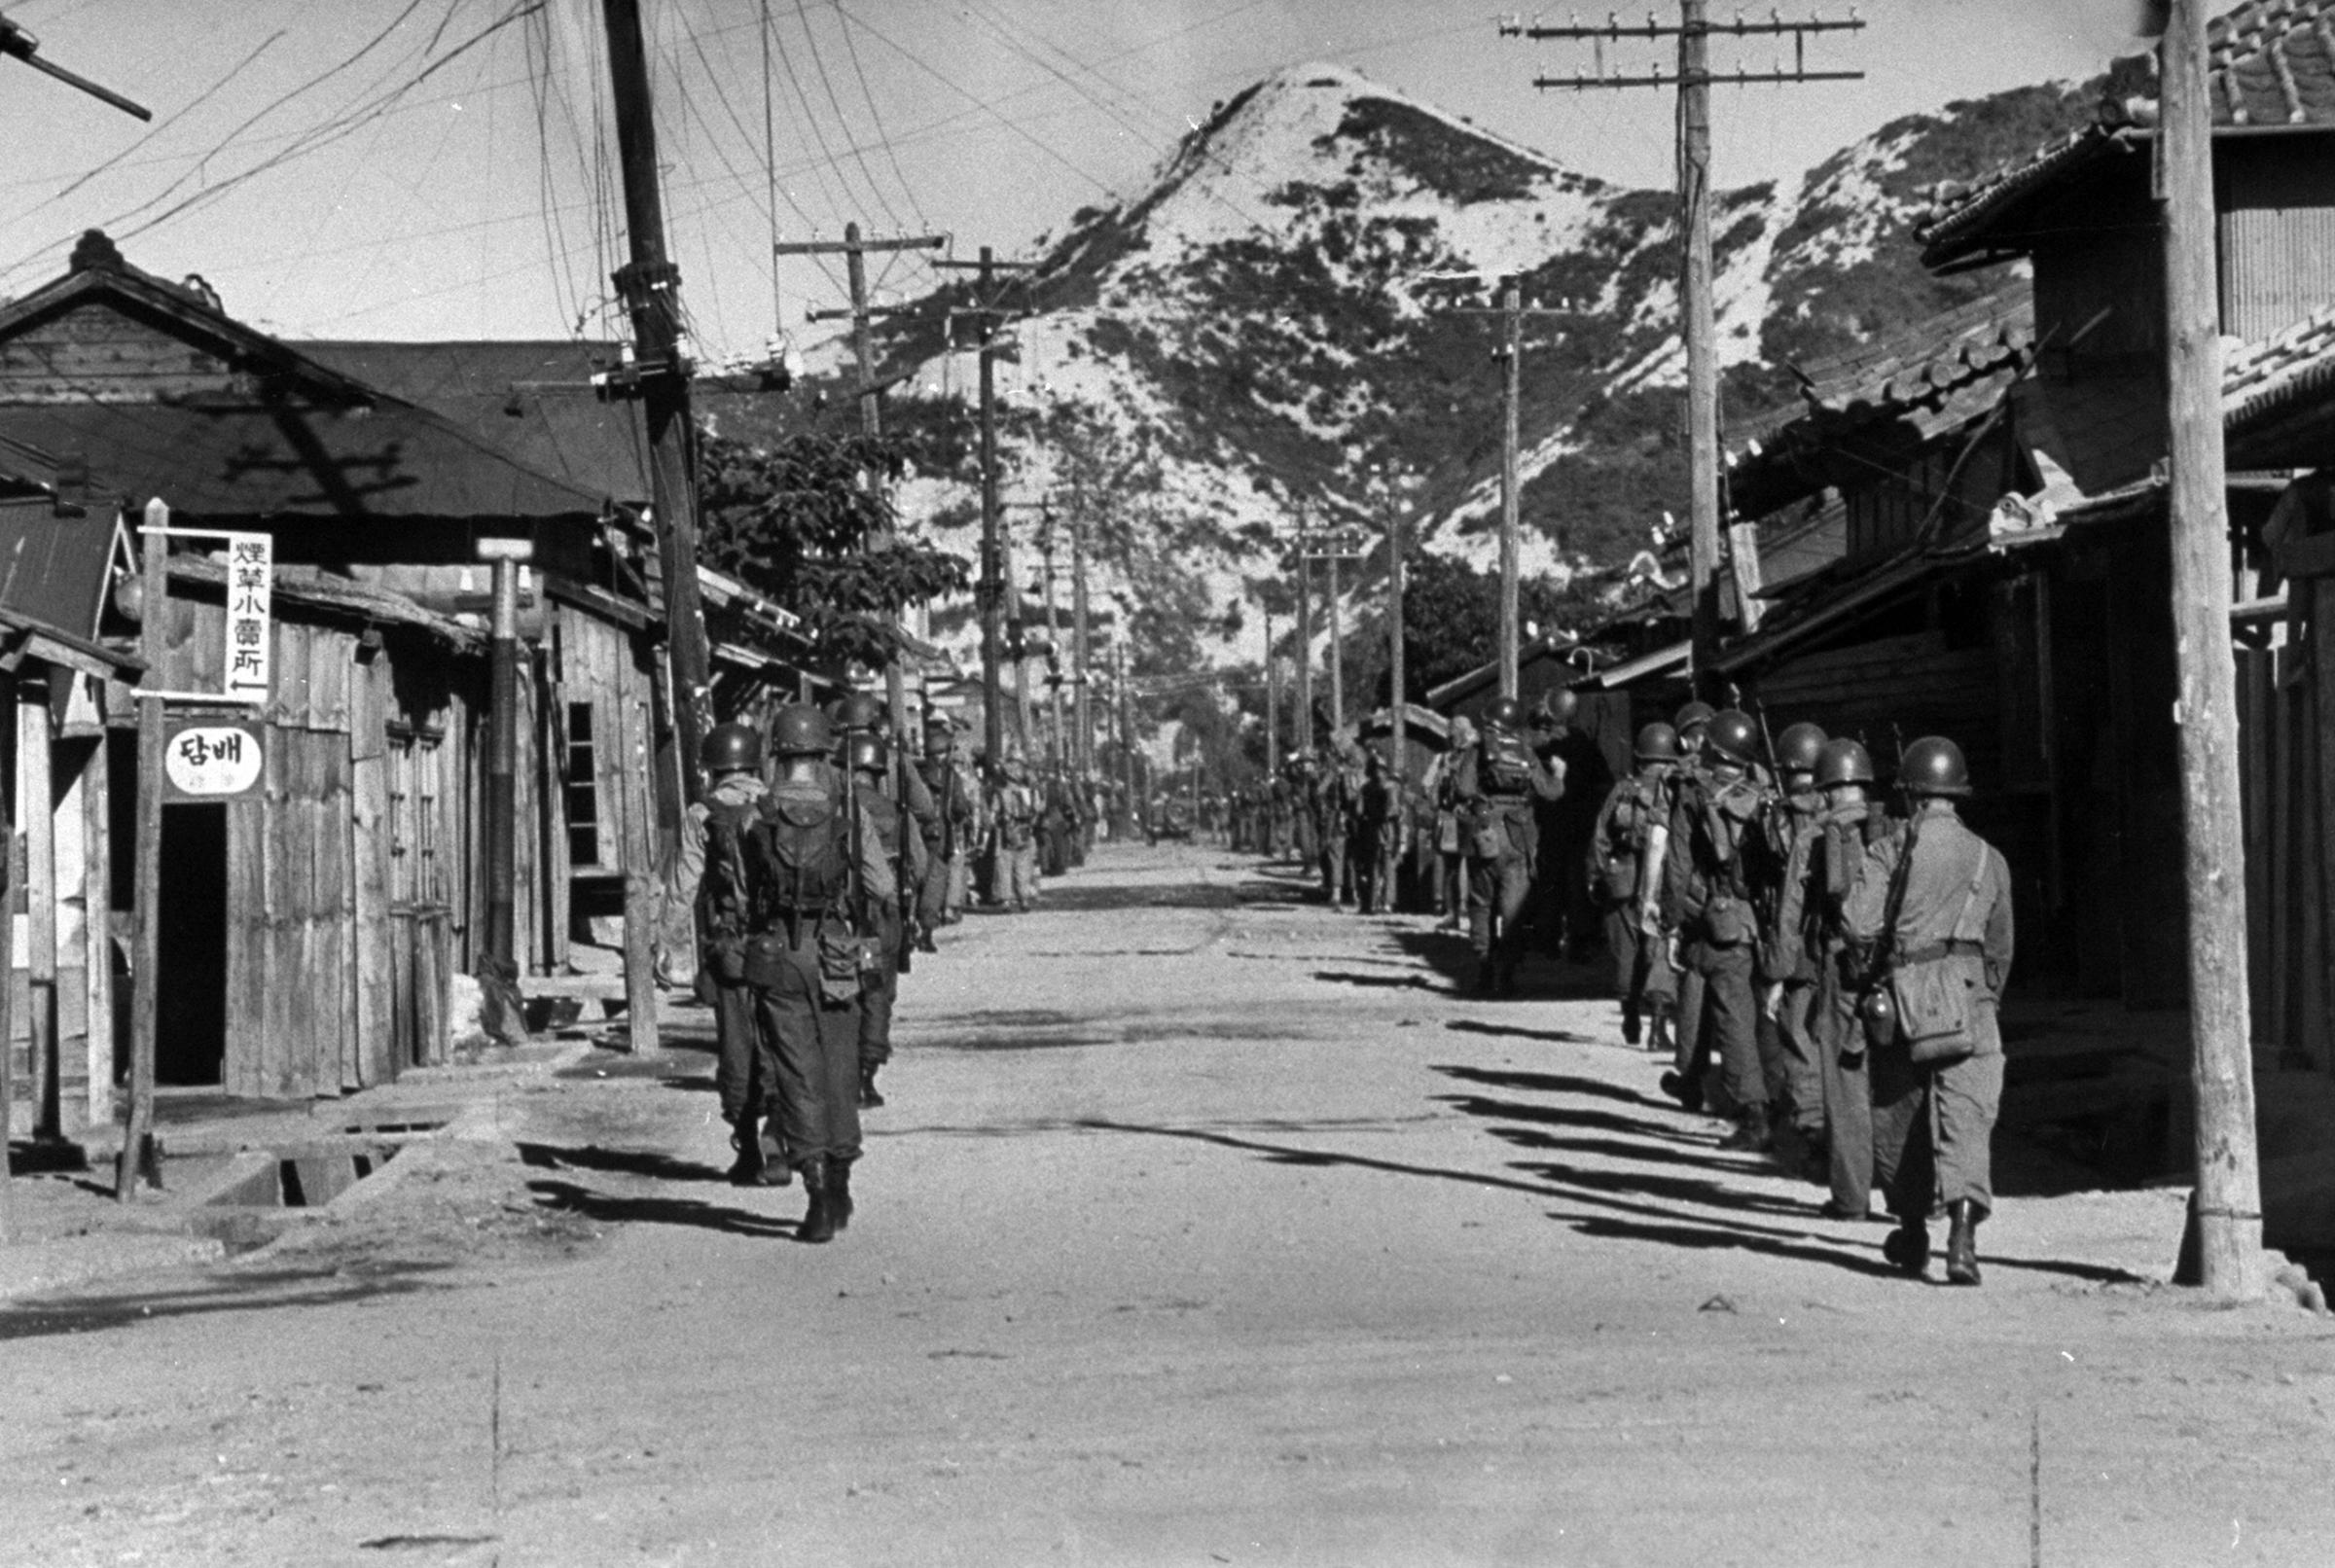 The 1st Cavalry in Korea, July 1950.